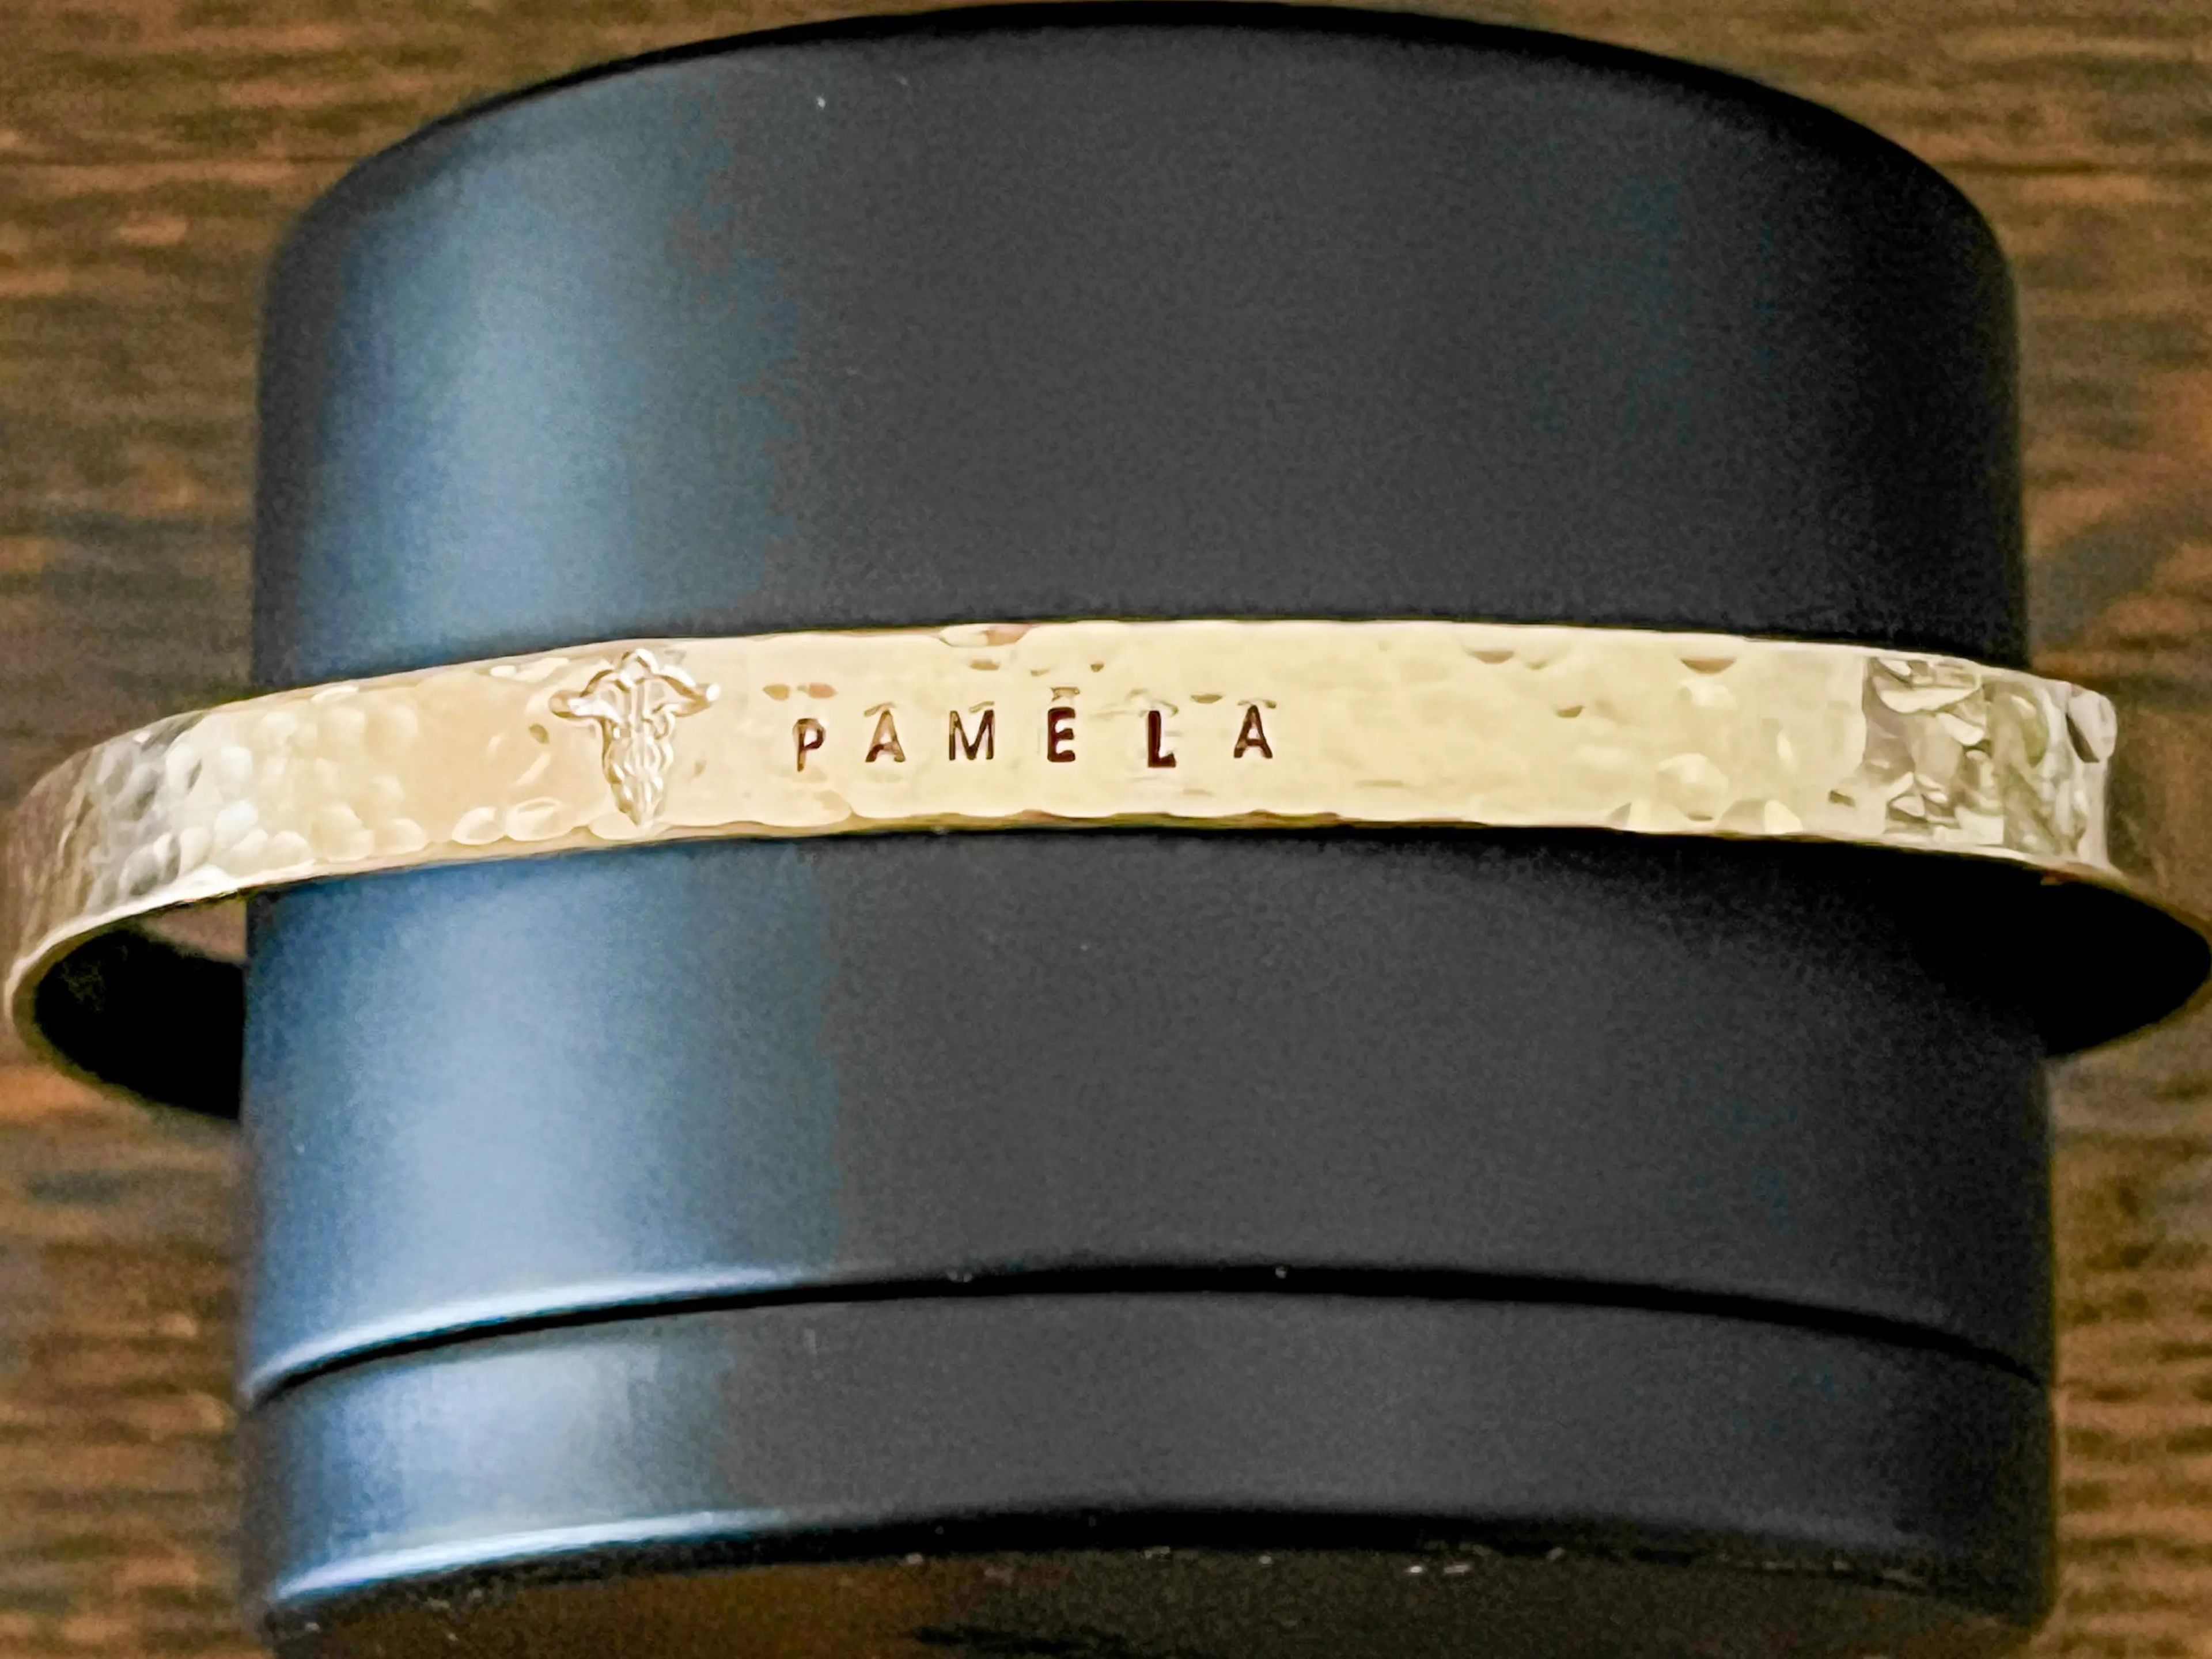 A black bracelet holder on a wood floor showcases a gold bracelet with the name "Pamela" engraved on it